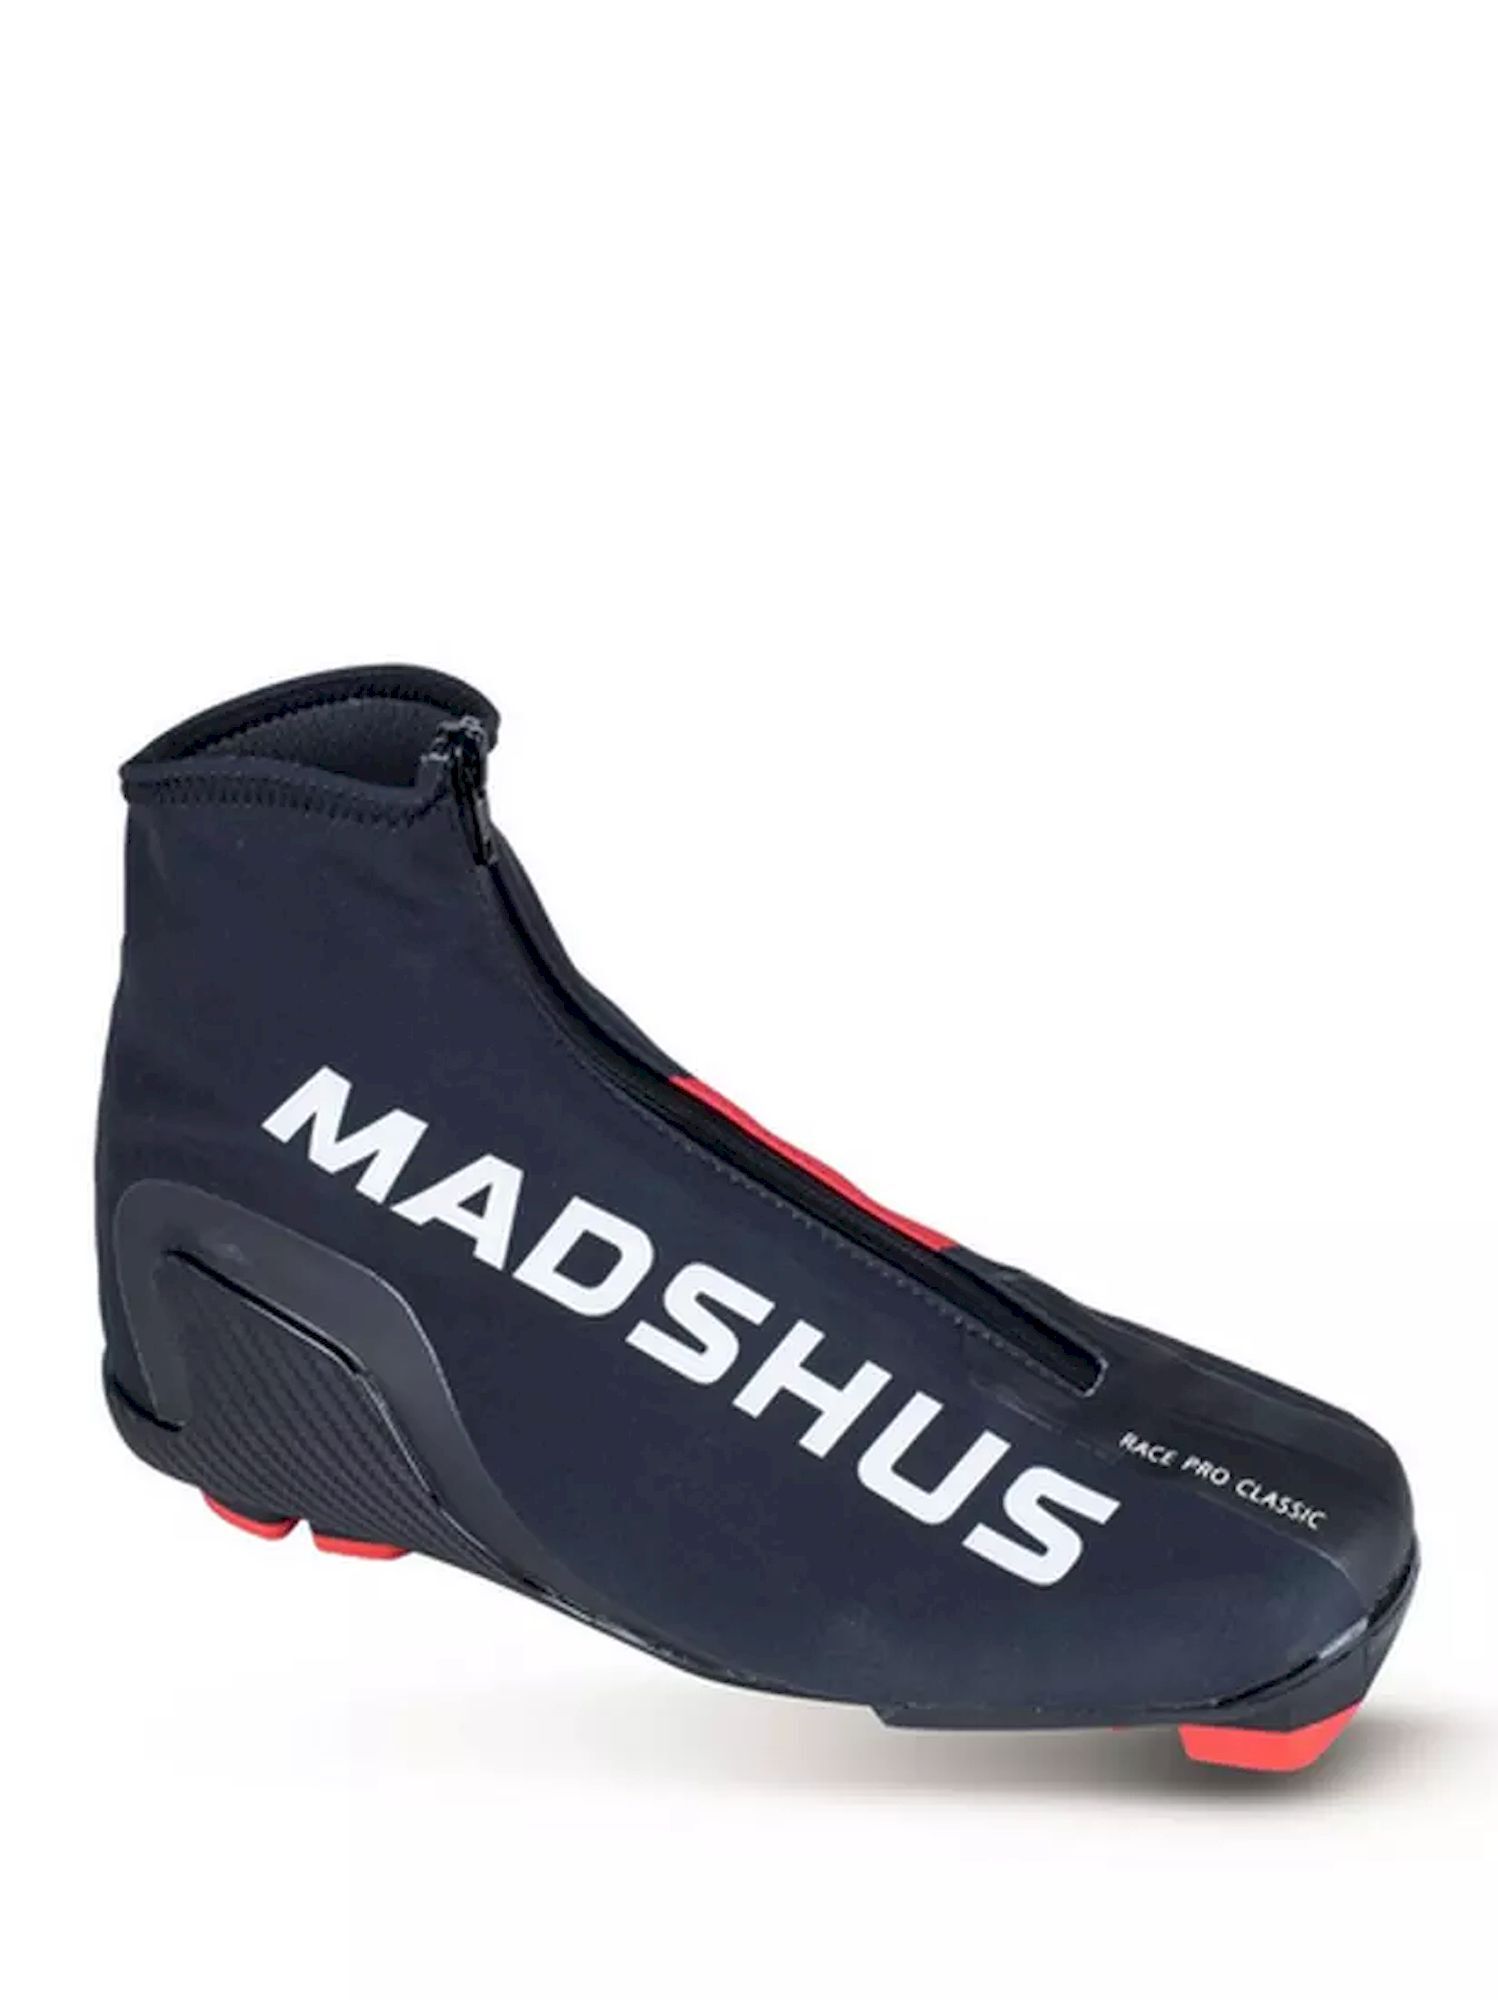 Madshus Race Pro Classic - Botas de esquí de fondo | Hardloop